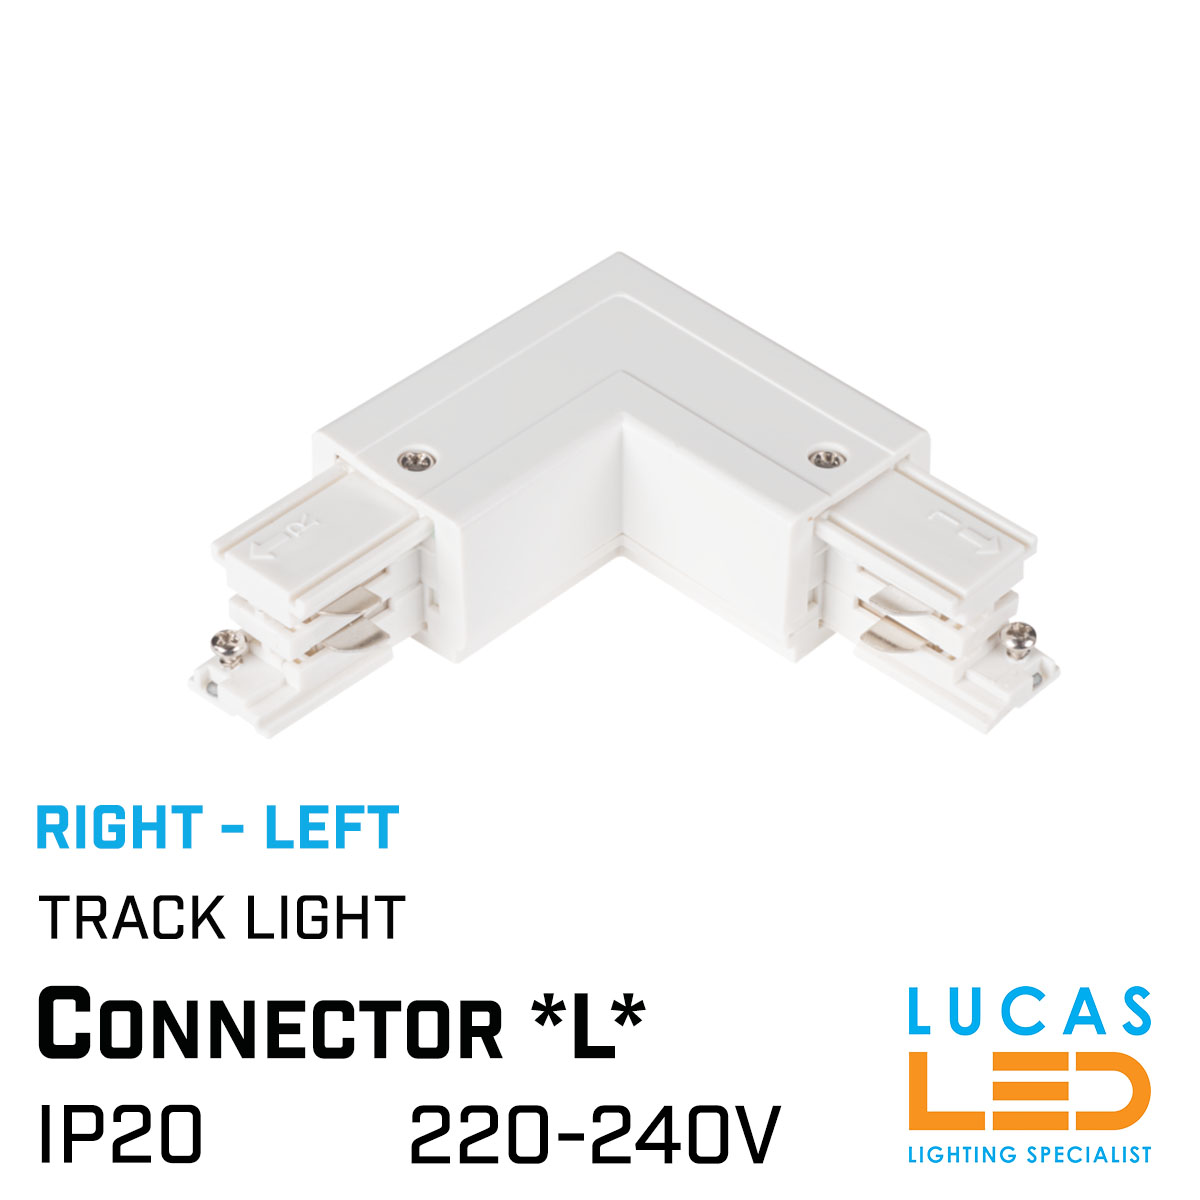 CONNECTOR - L - RIGHT - LEFT - for Rail - LED Track Lighting system - 3-phase - 3 circuit - RL - White